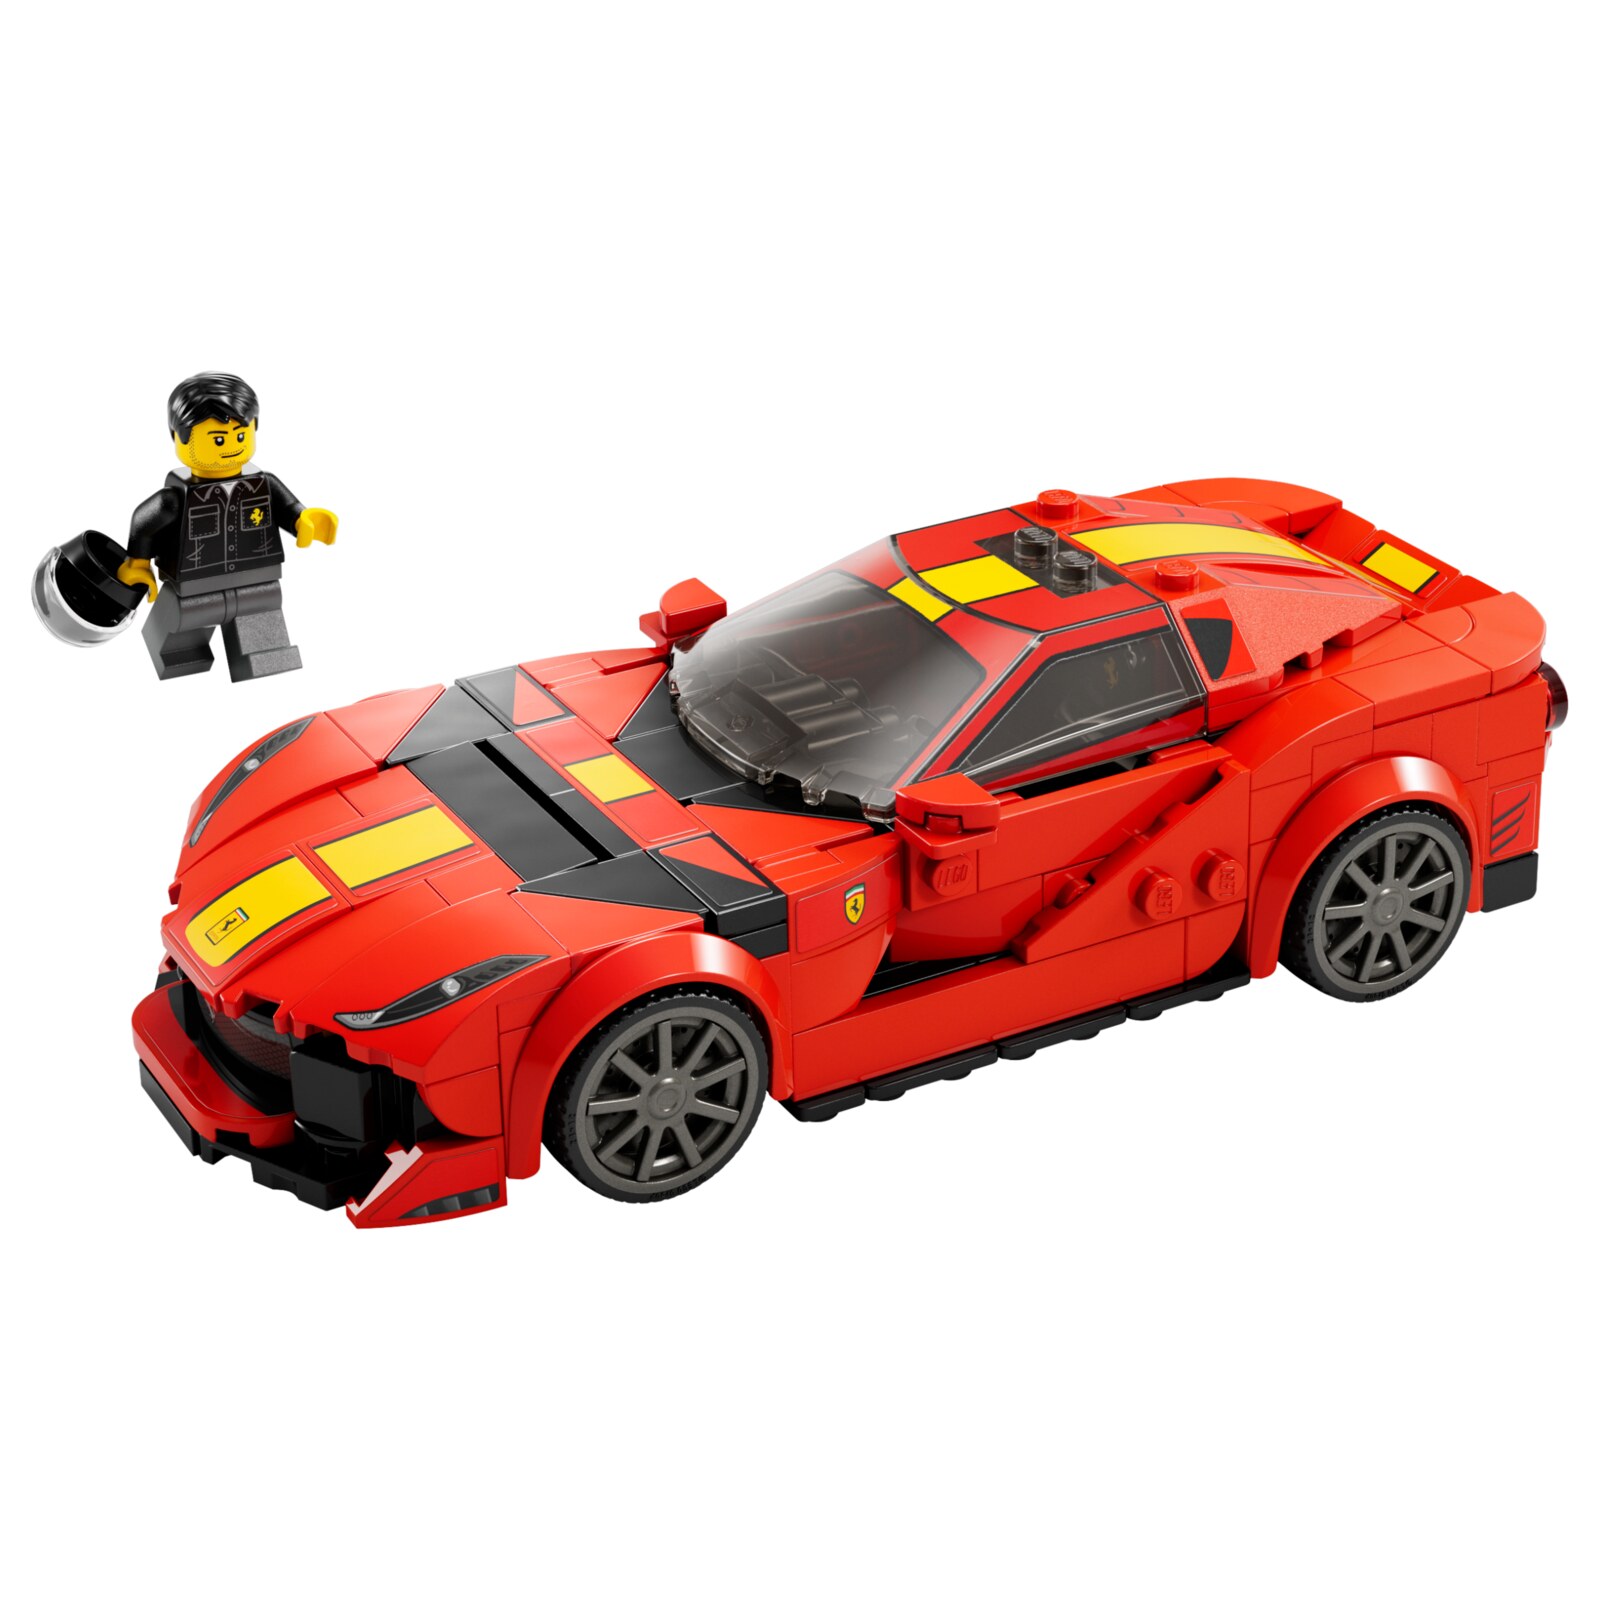 Конструктор LEGO Speed Champions Ferrari 812 Competizione, 261 деталь, 76914 конструктор lego лего speed champions mclaren f1 581 деталей 76918